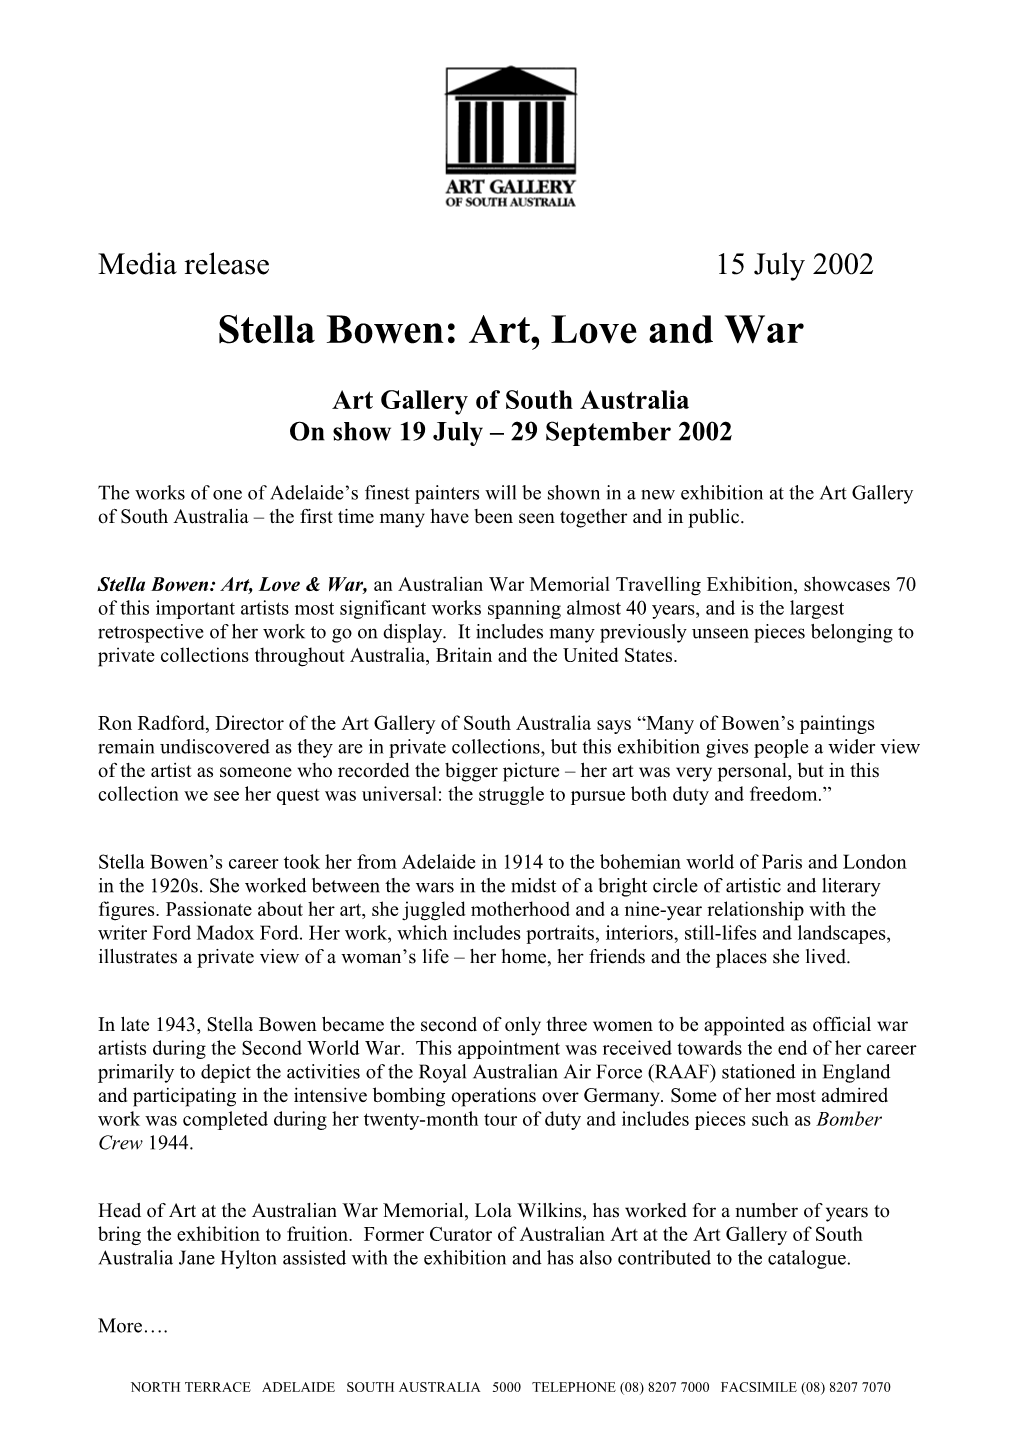 Stella Bowen: Art, Love and War